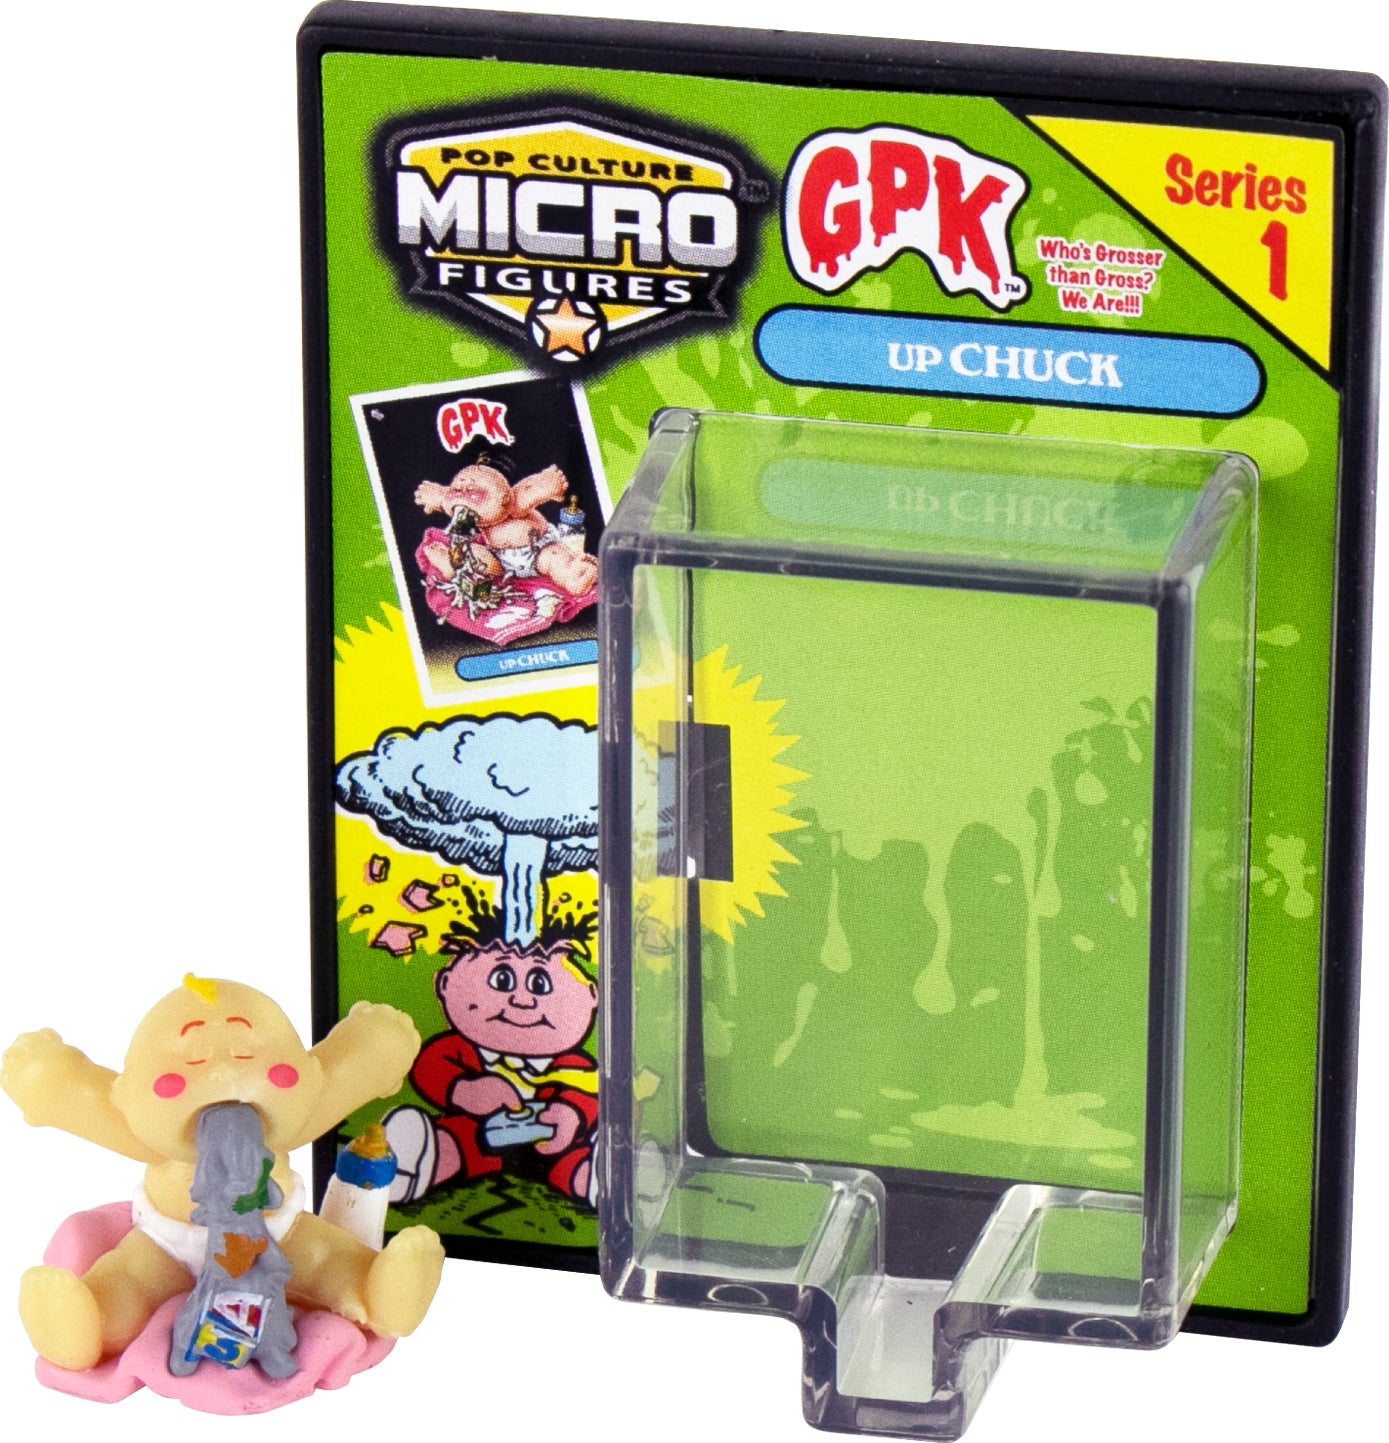 World’s Smallest GPK Pop Culture Micro Figures (assorted)